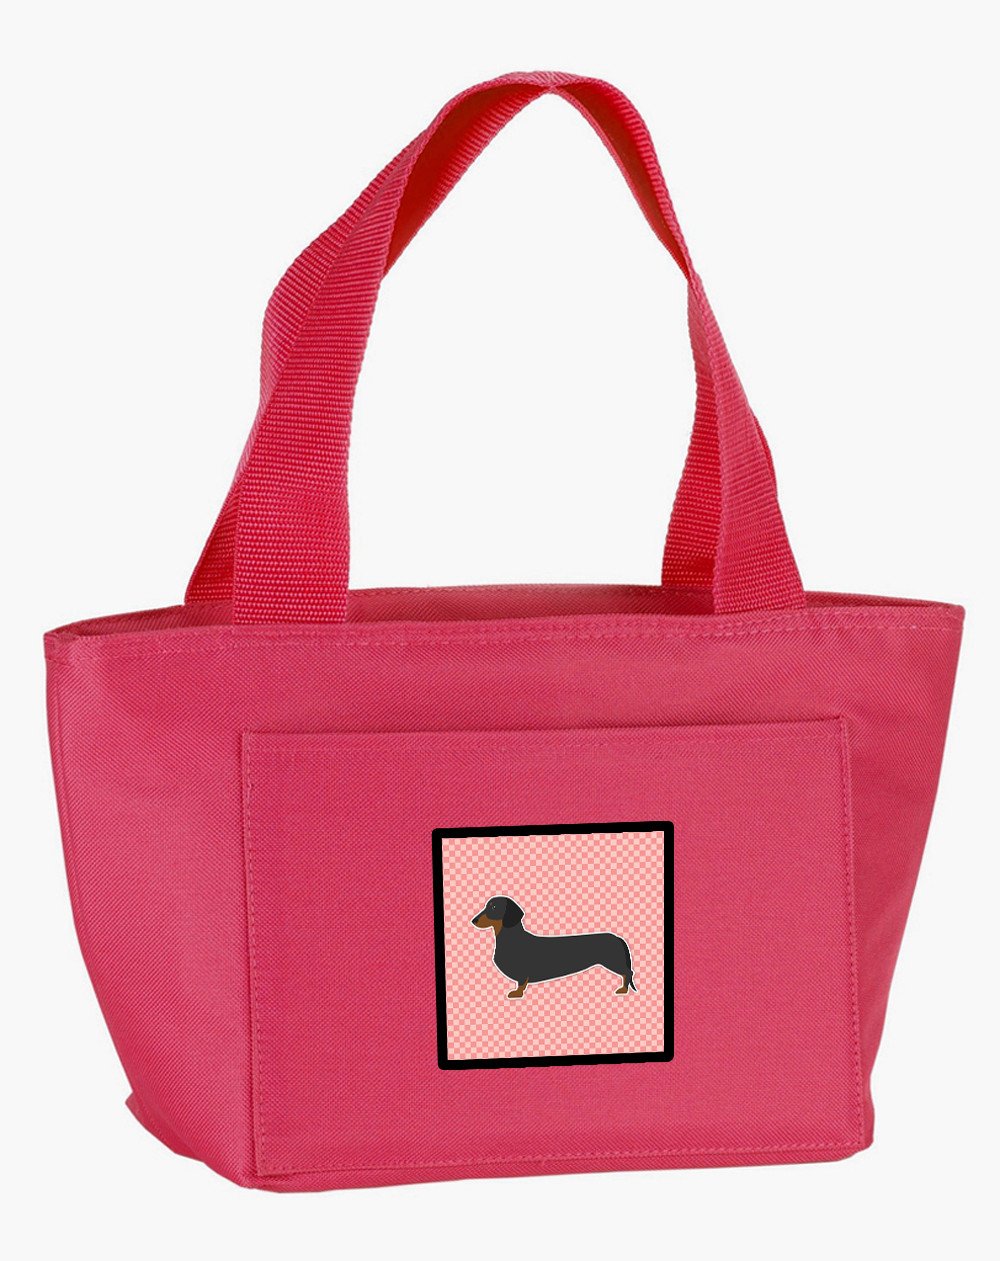 Dachshund Checkerboard Pink Lunch Bag BB3582PK-8808 by Caroline's Treasures